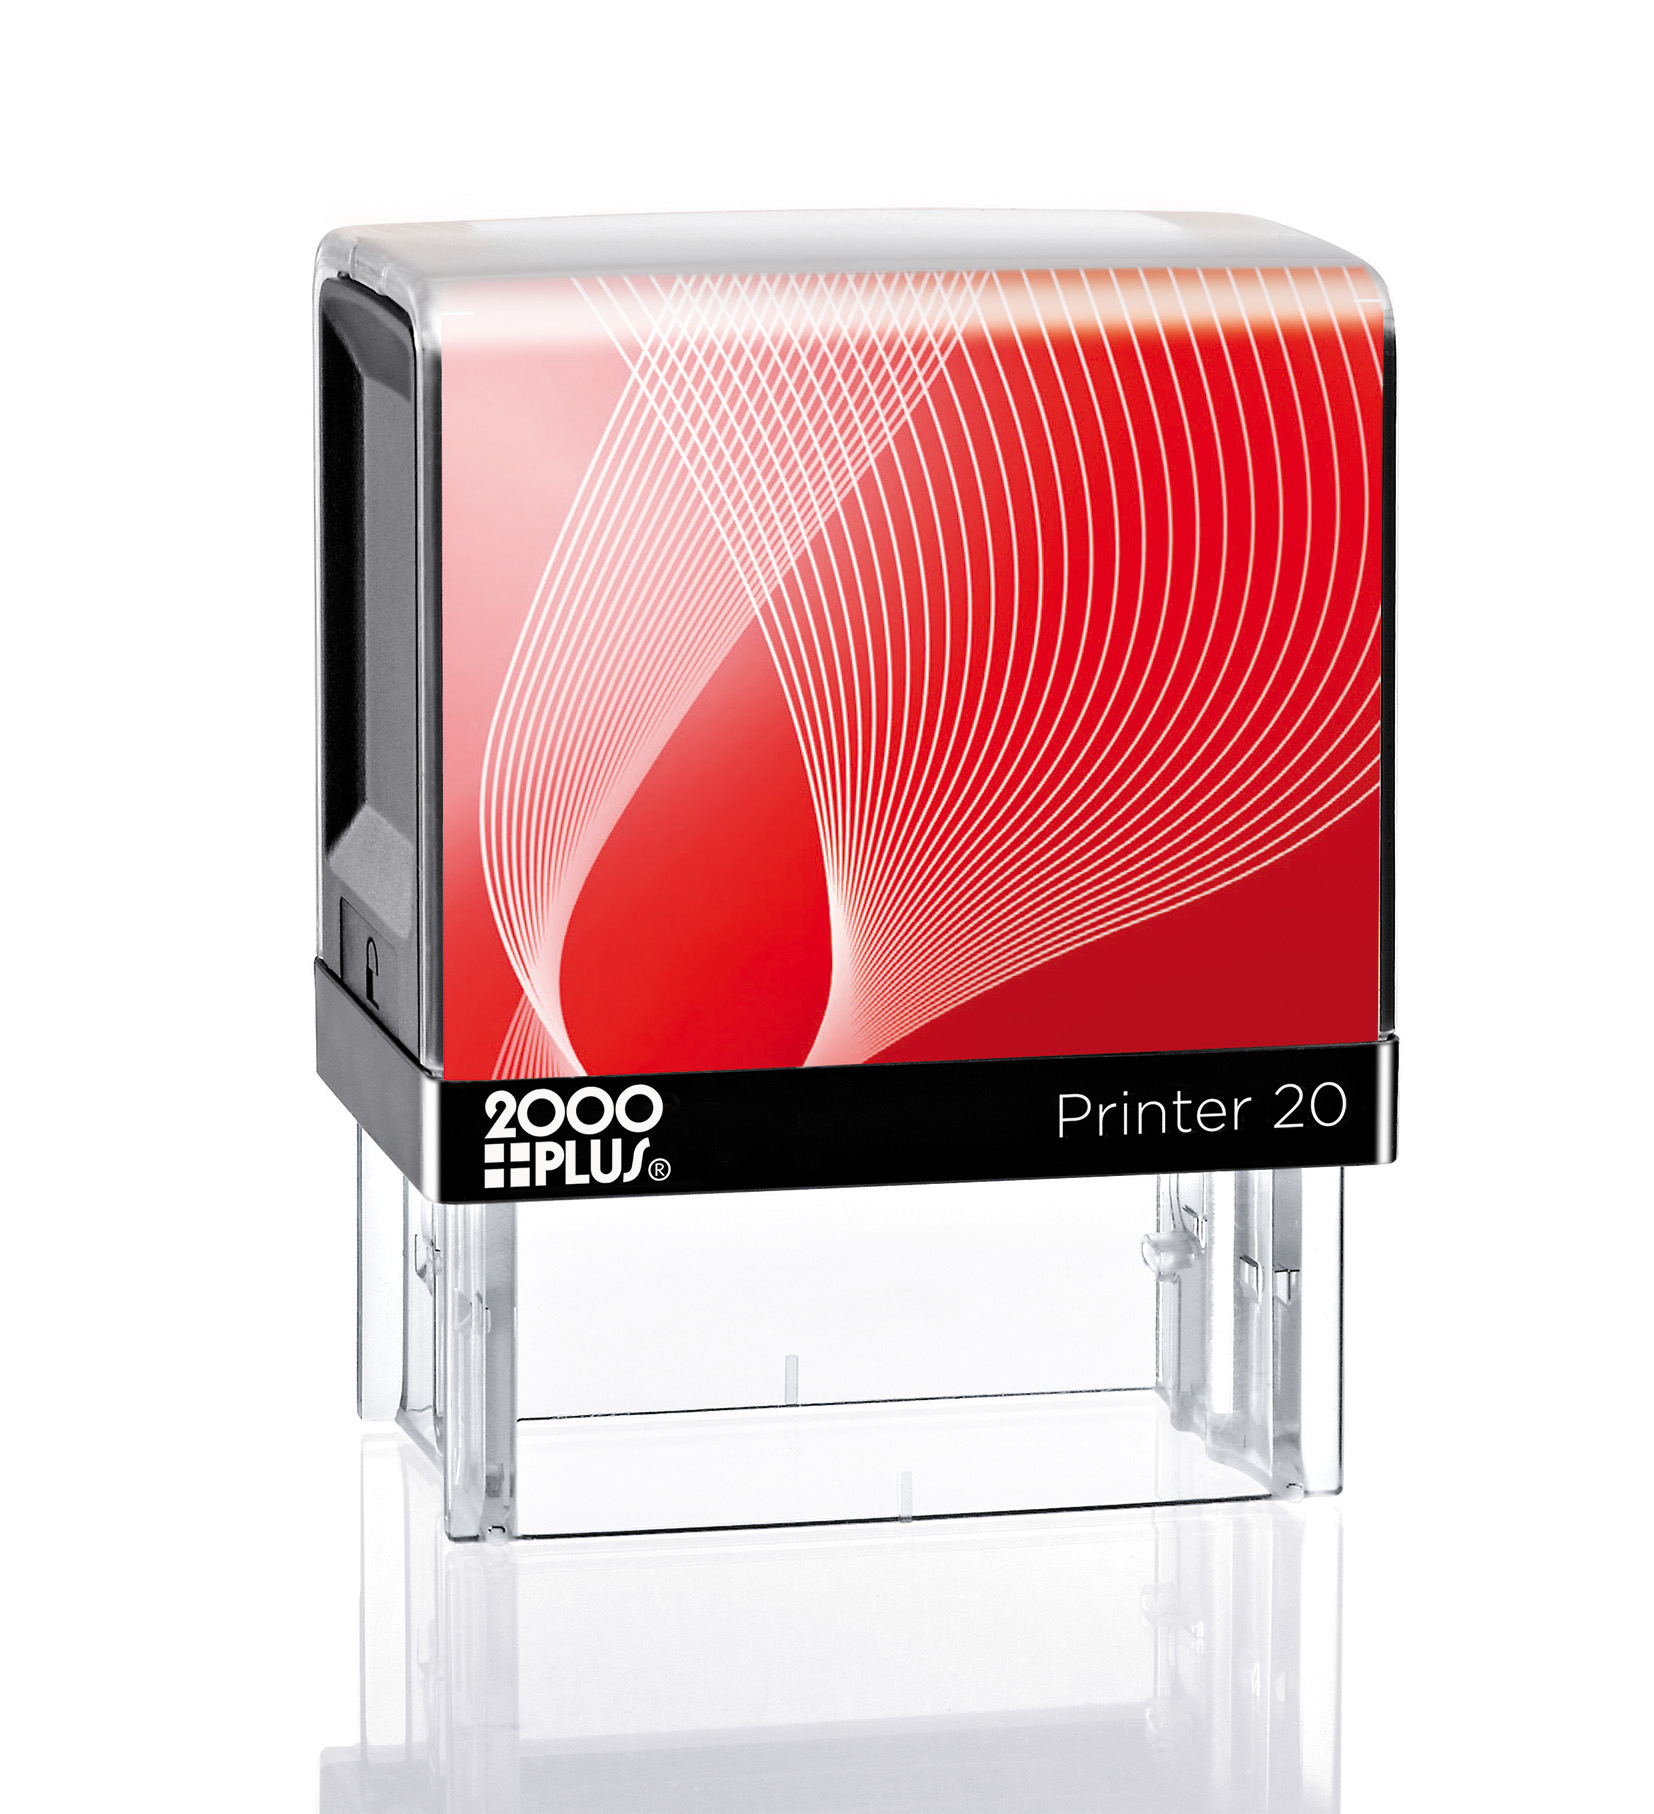 Printer 20